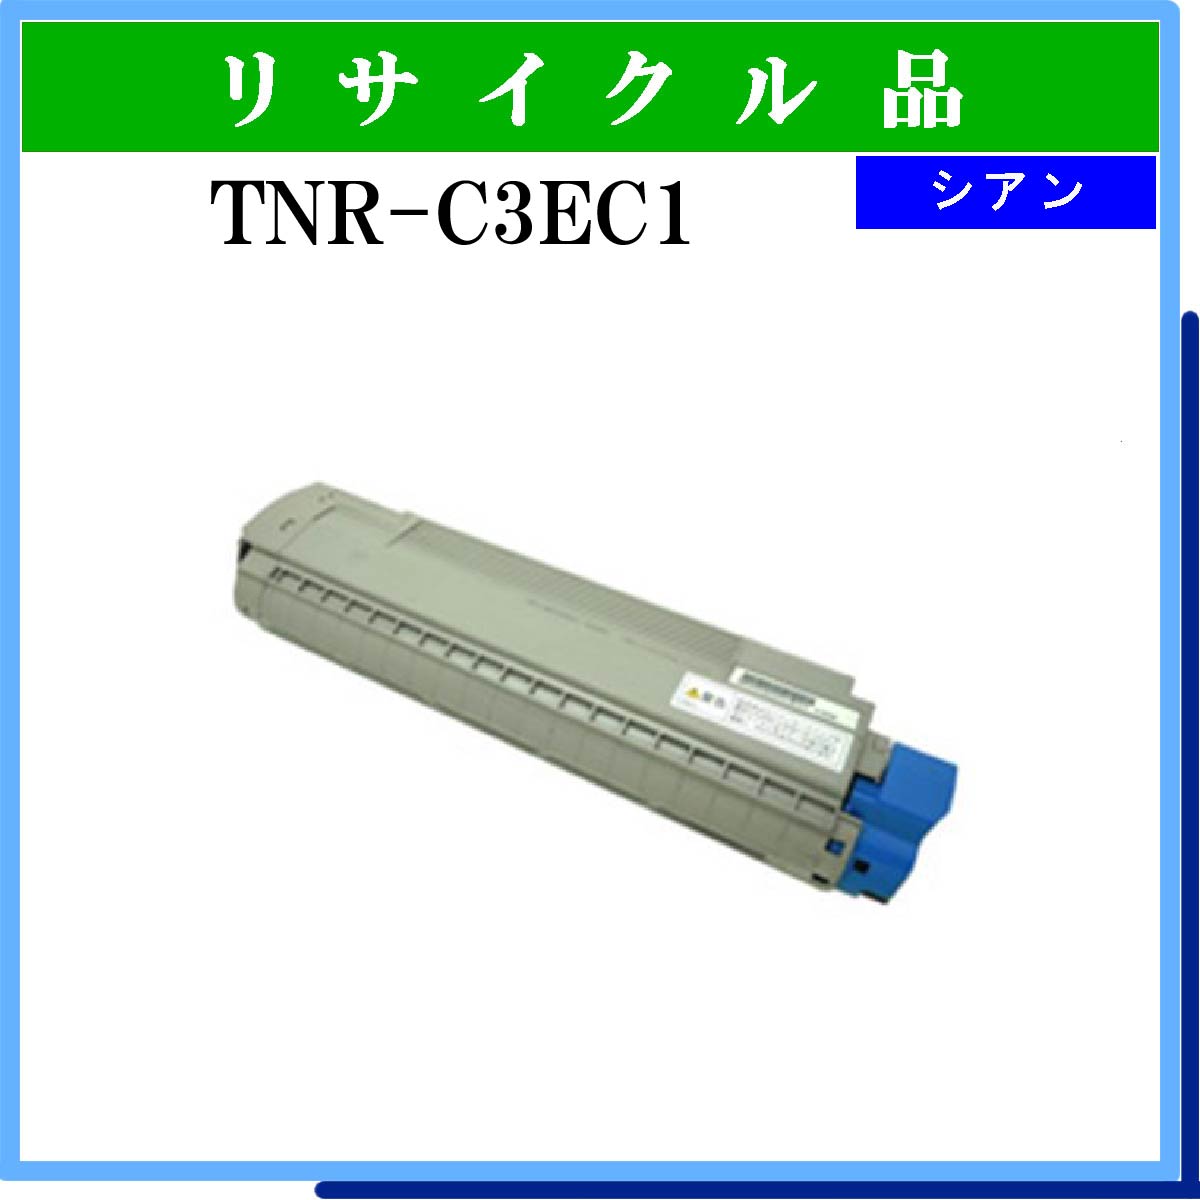 TNR-C3EC1 - ウインドウを閉じる